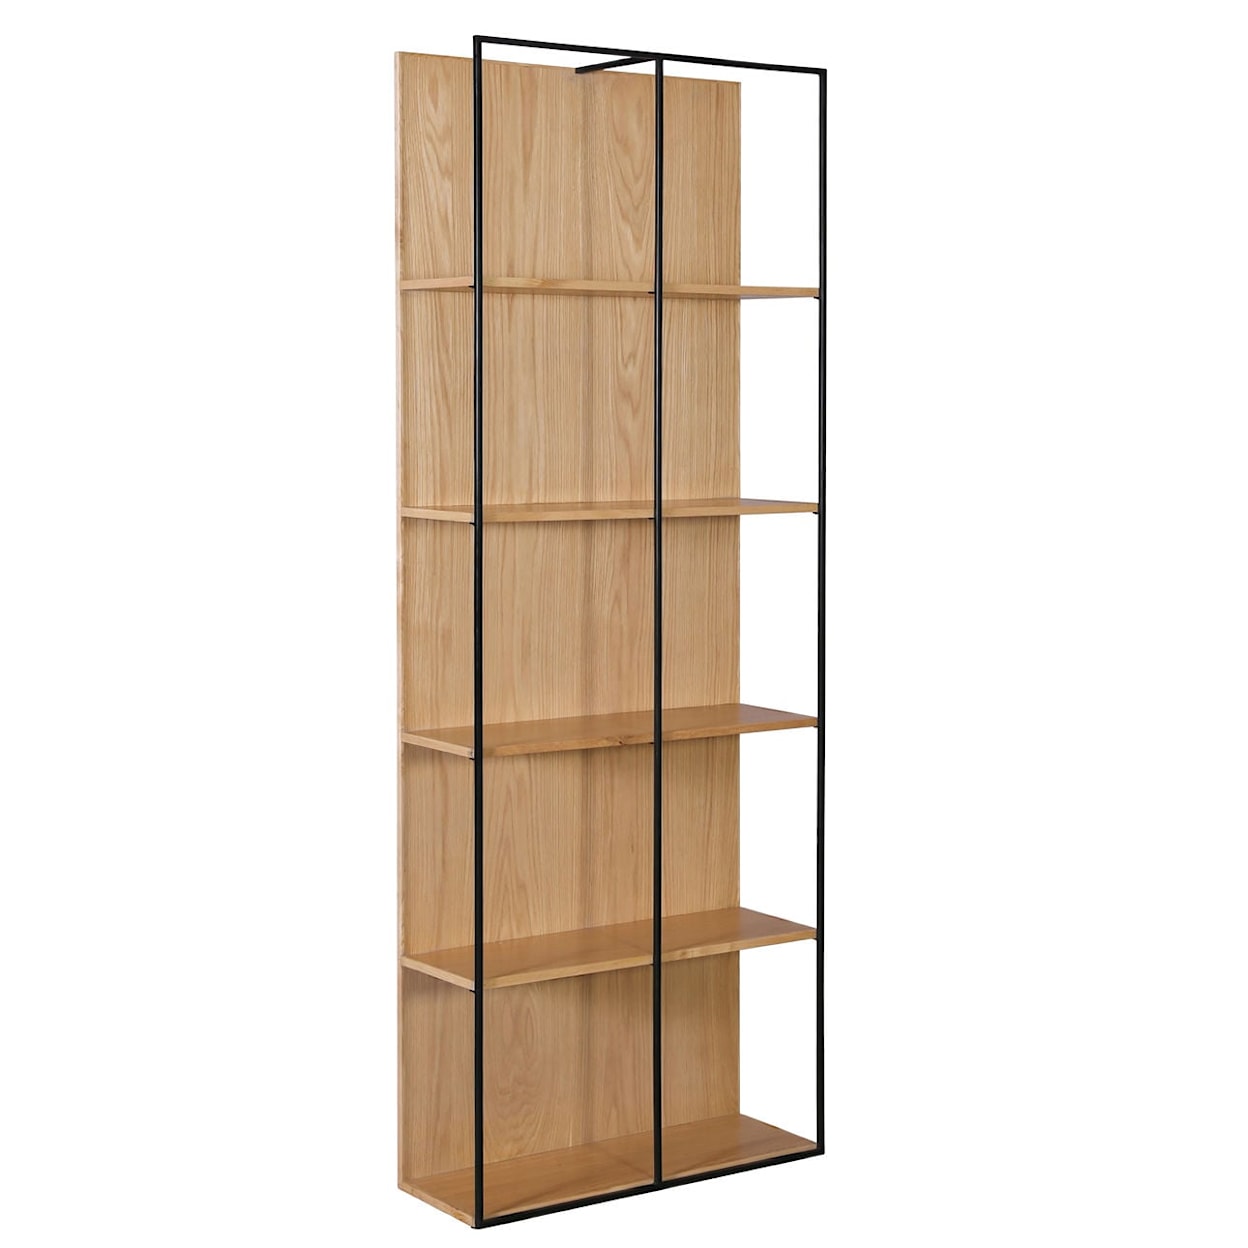 Dovetail Furniture Eddington Bookcase